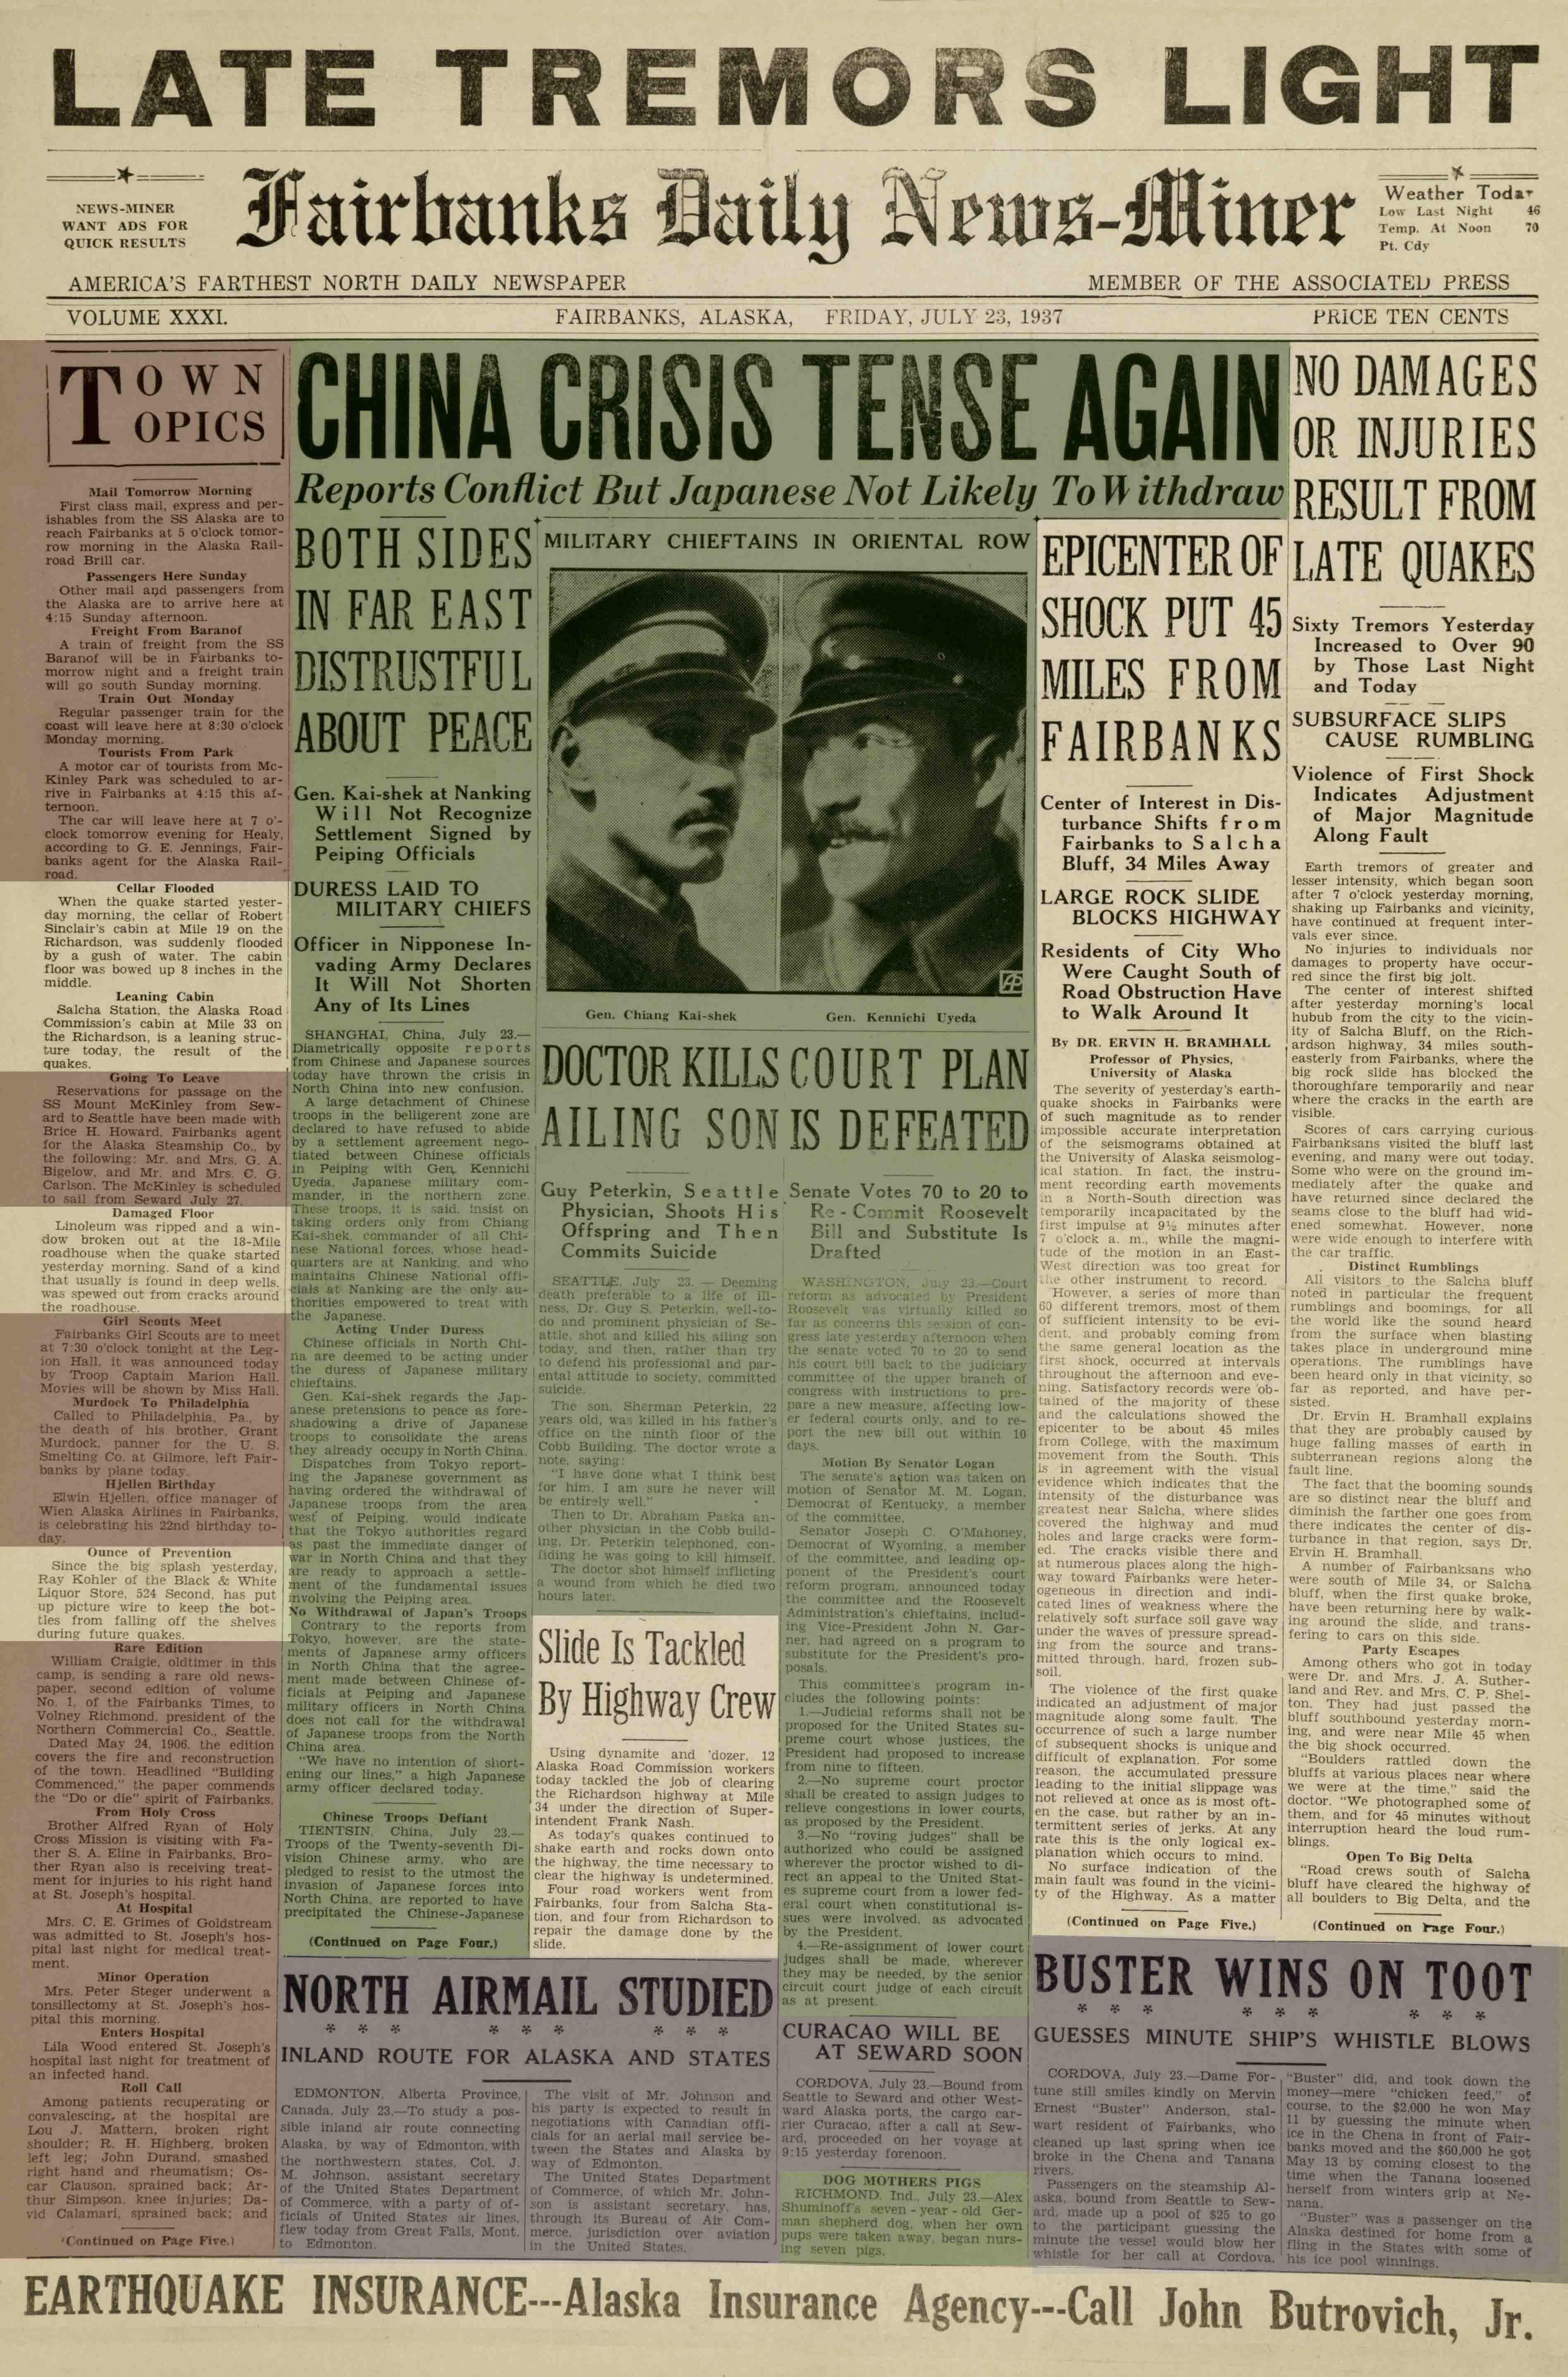 1937 July 23, Fairbanks Daily News-Miner (pg 1)